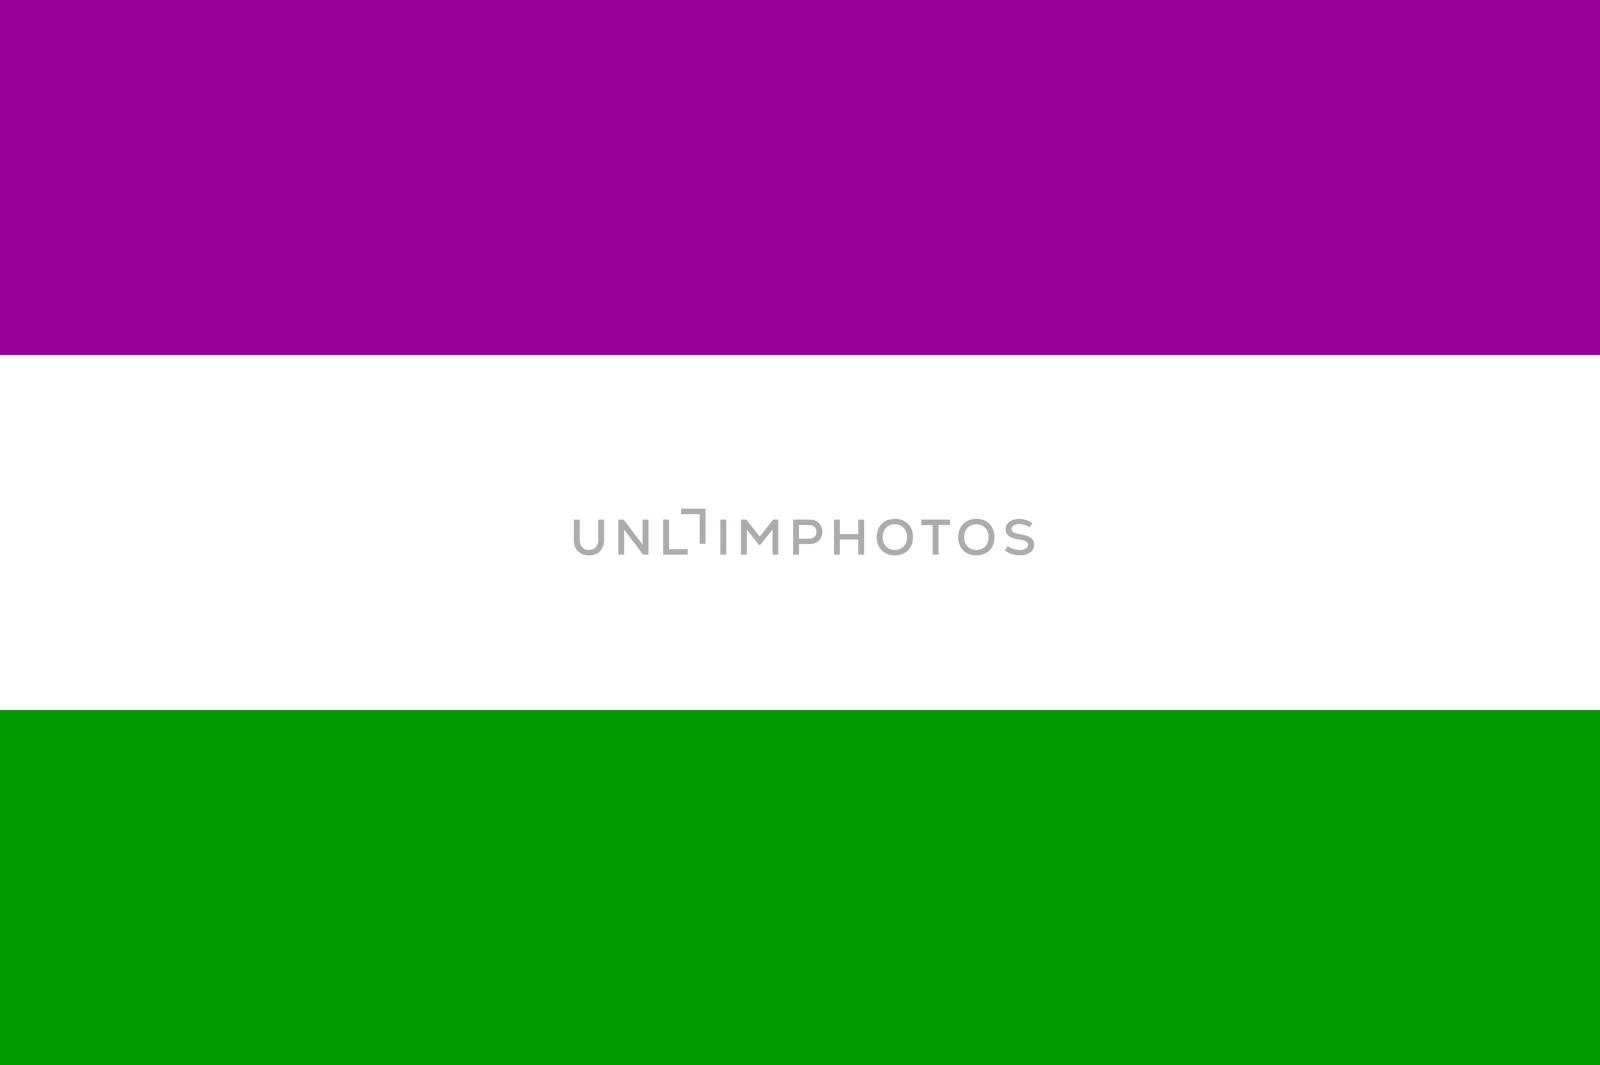 Suffragette flag symbol by tony4urban